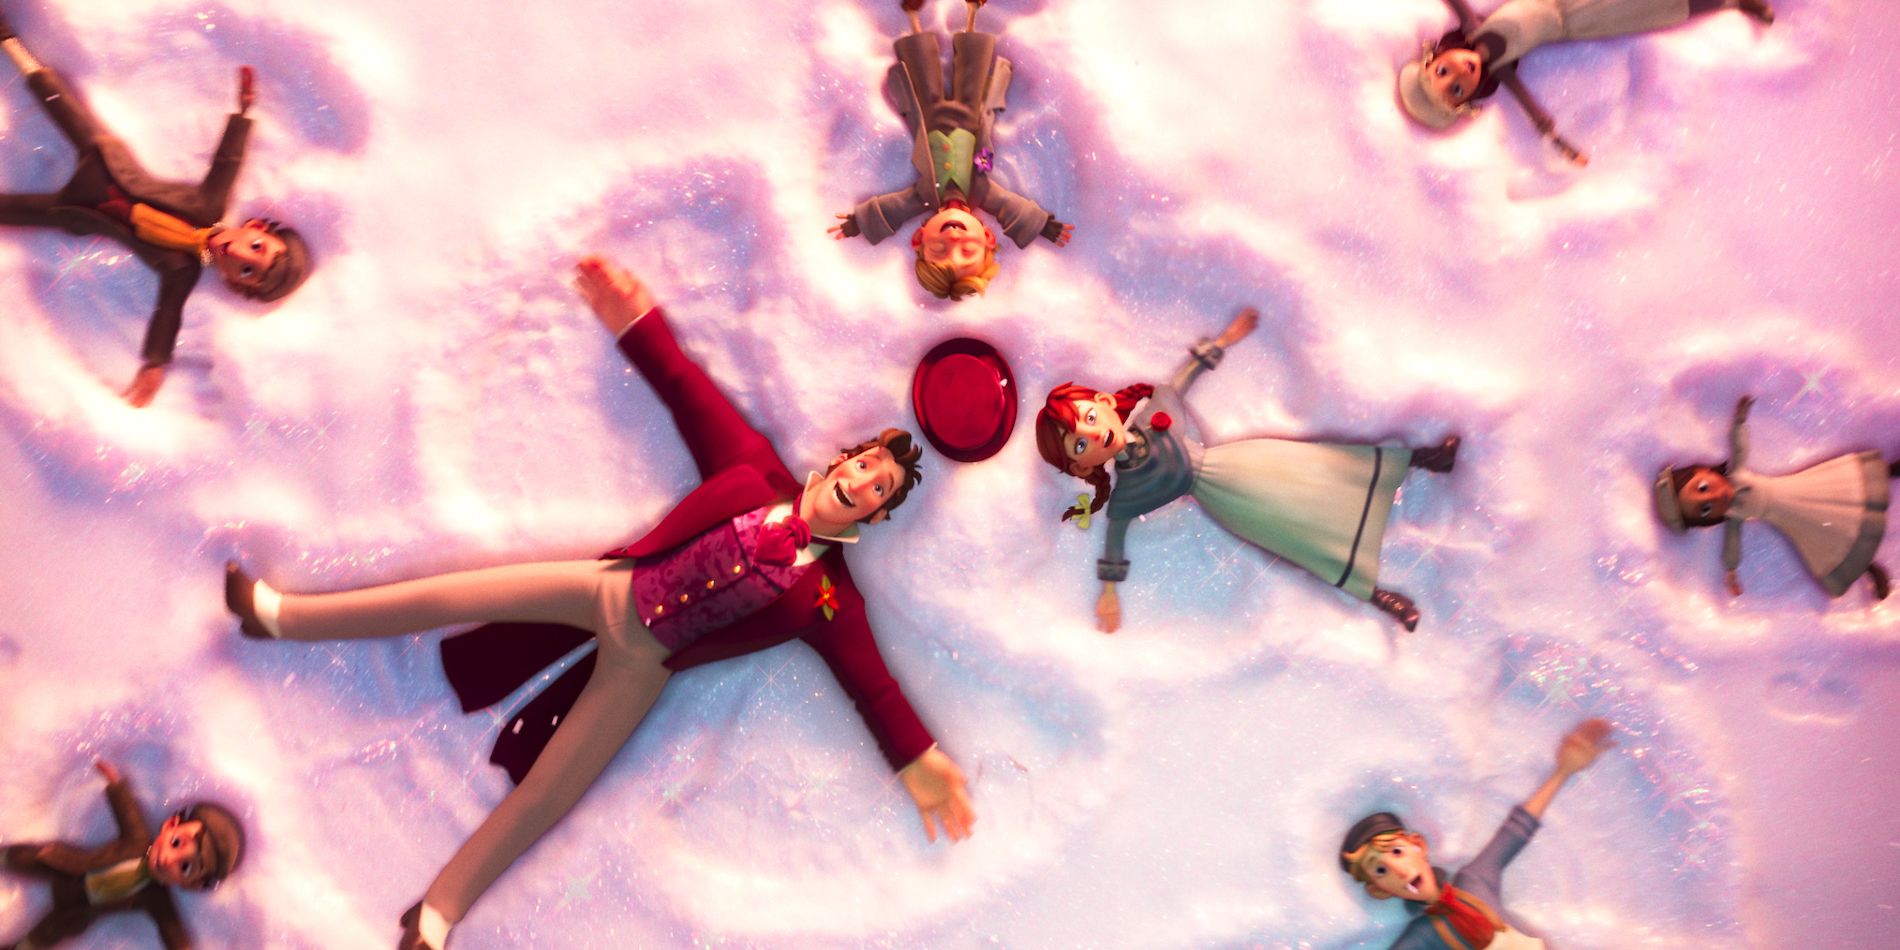 Scrooge making snow angels with kids in Scrooge A Christmas Carol